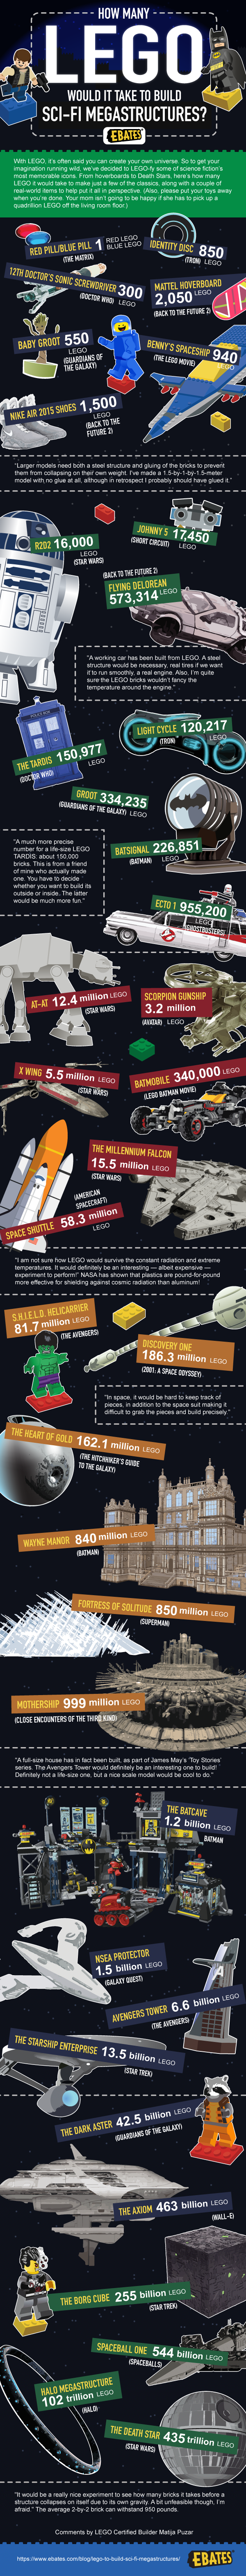 Sci Fi Lego Batman Movie Structures Infographic